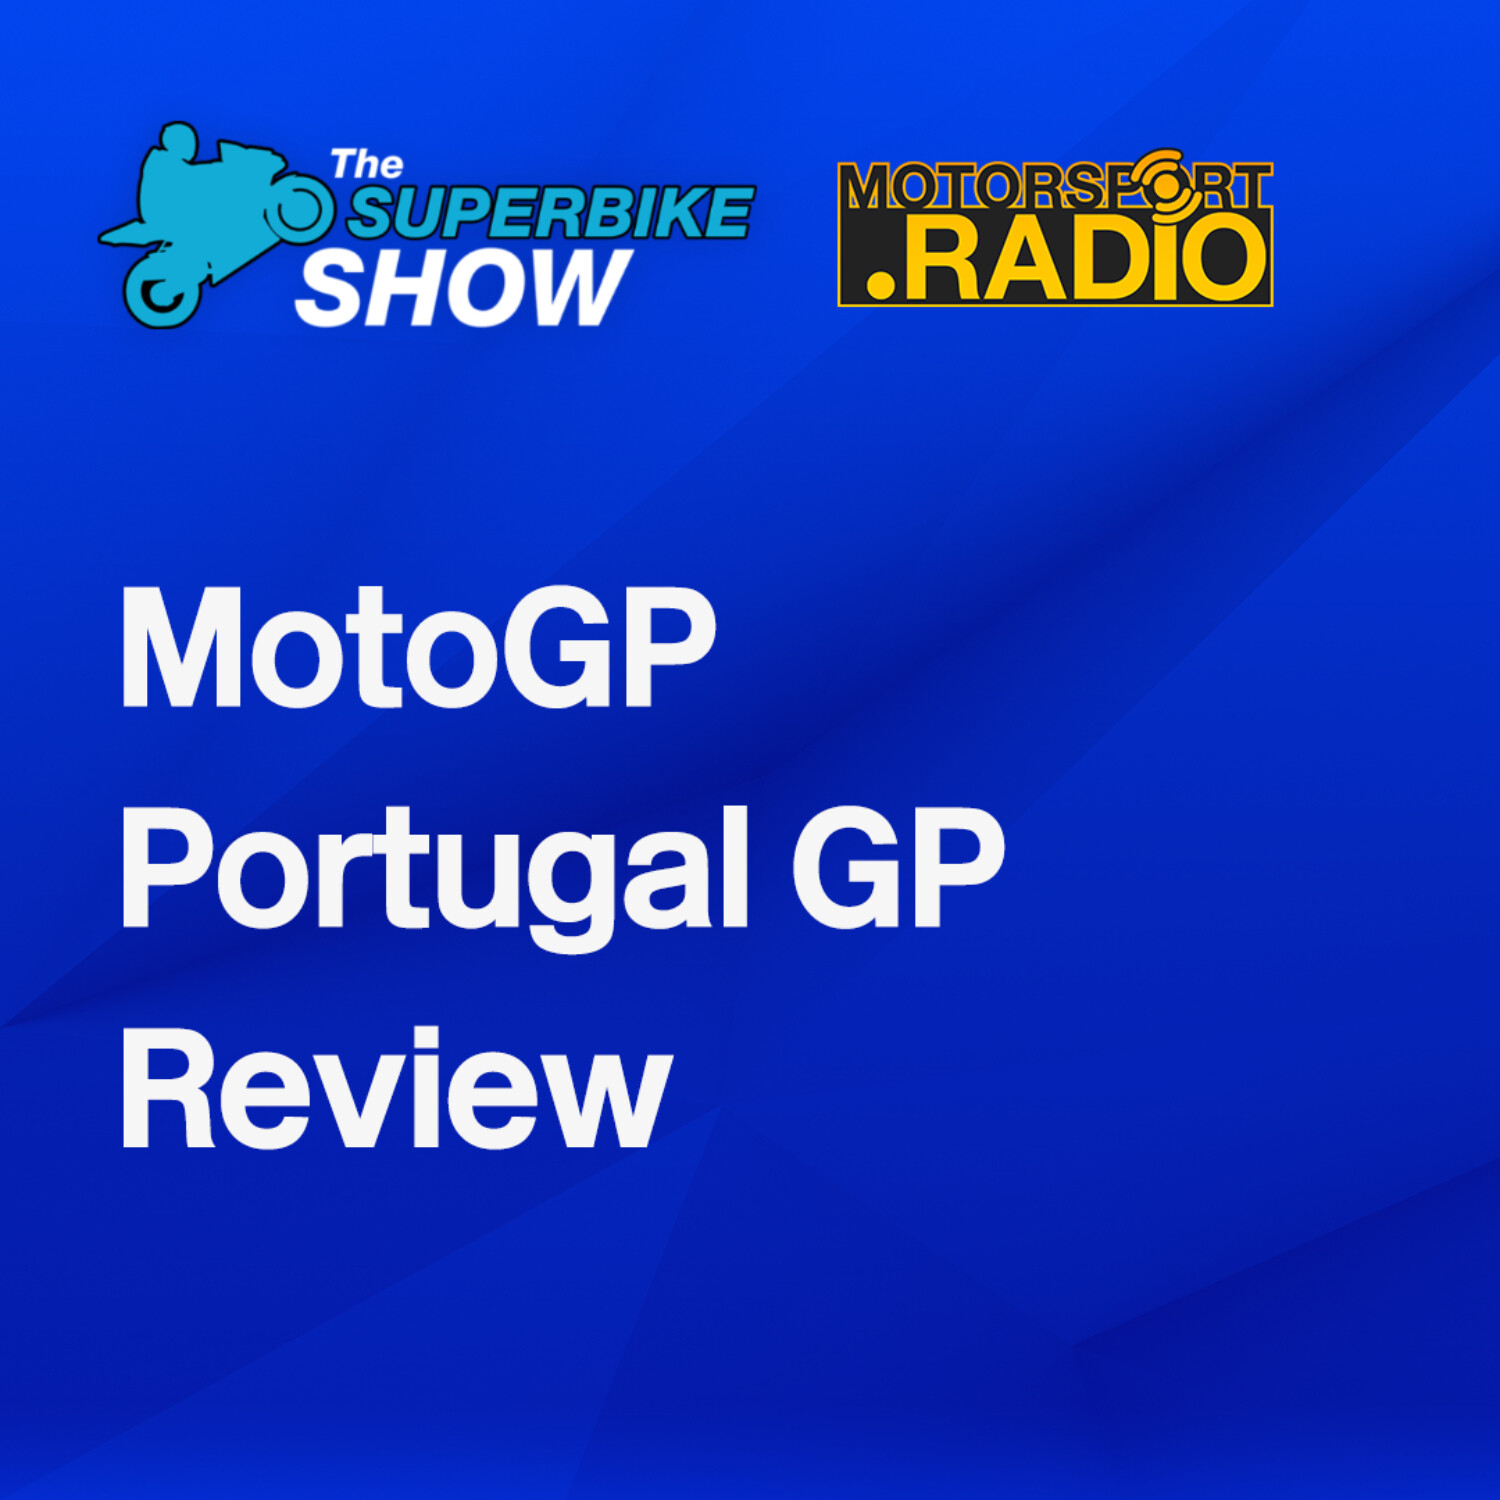 #MotoGP #PortugeseGP Review